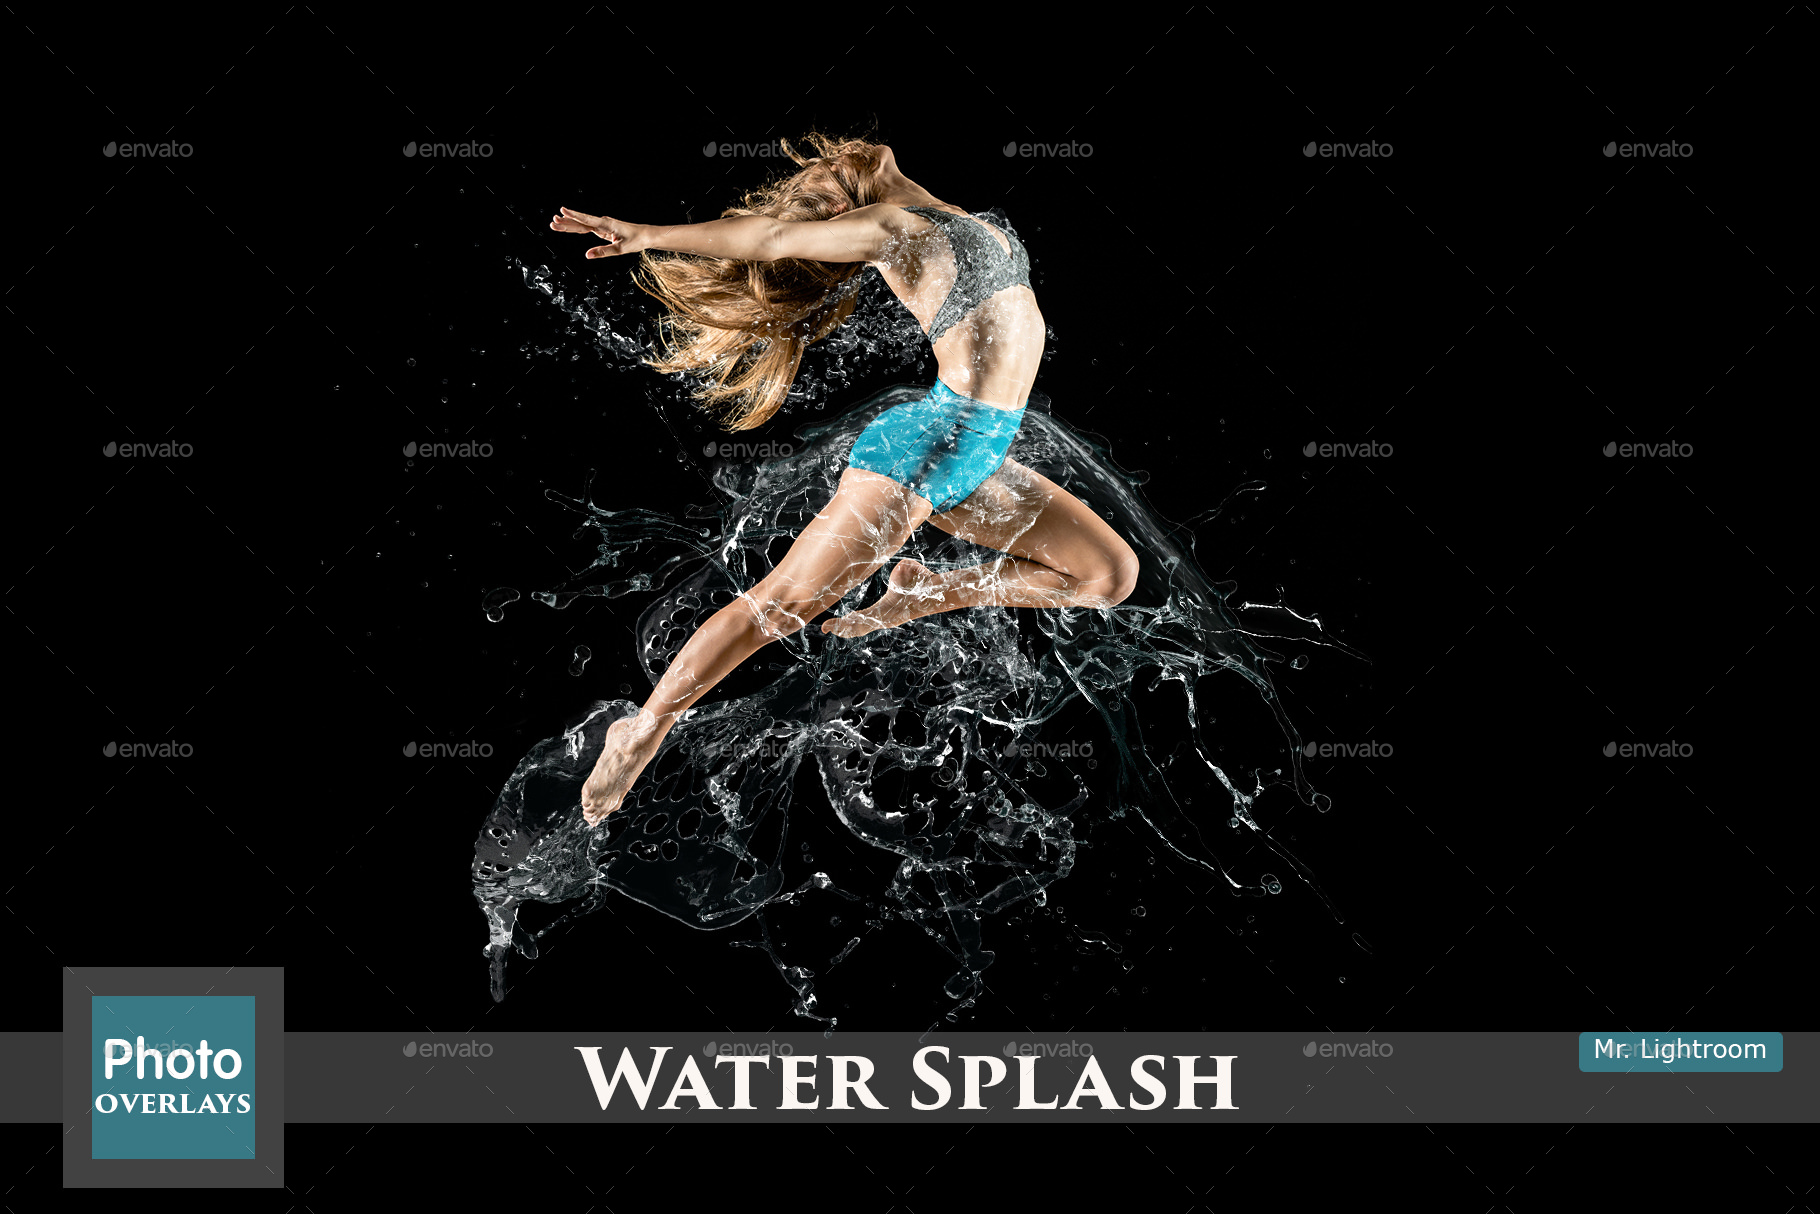 130 Water Splash Photo Overlays[Photoshop]